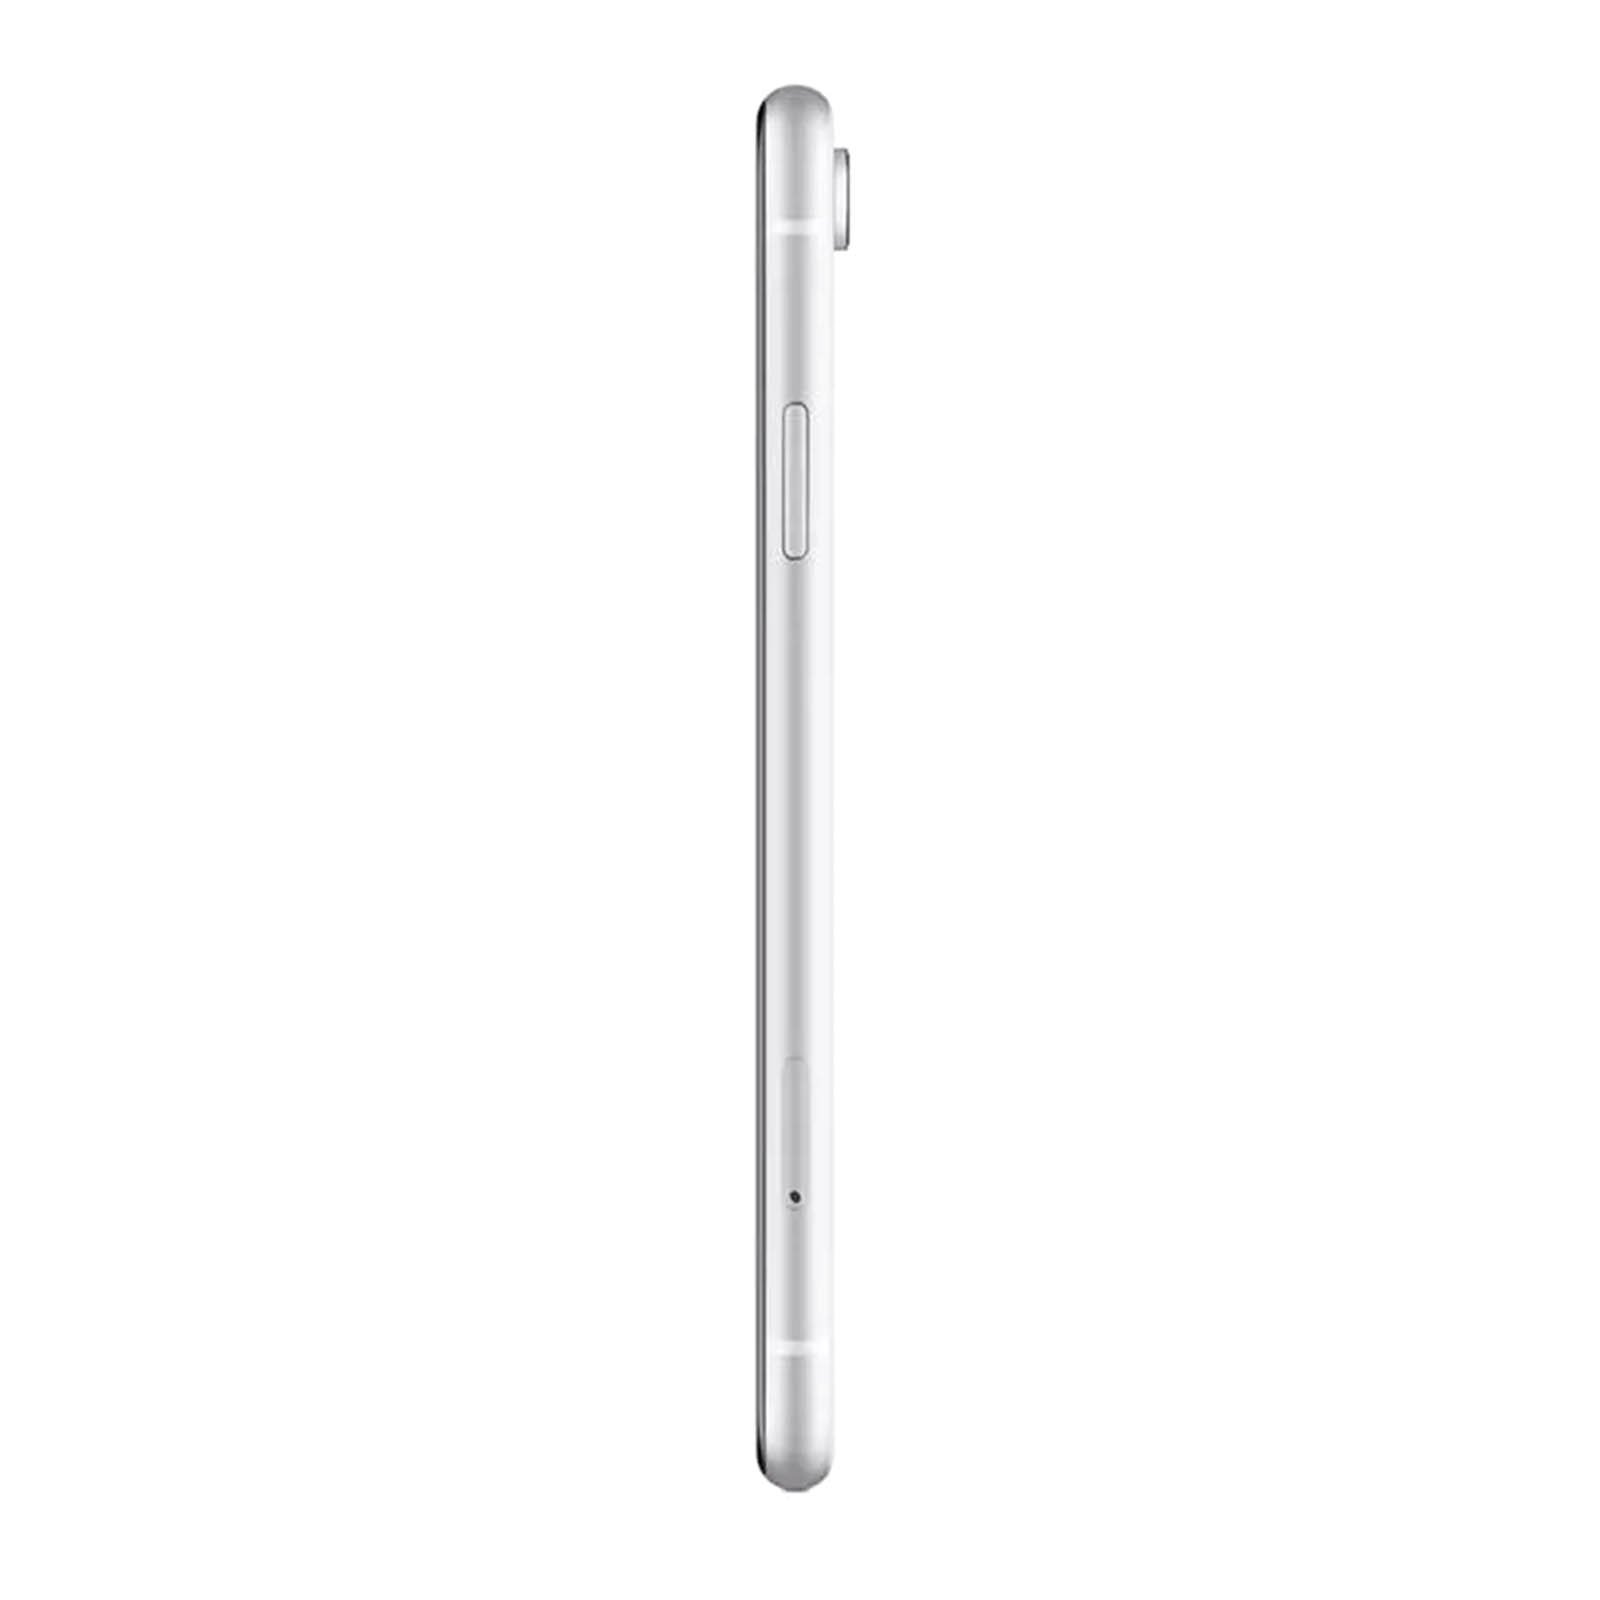 Apple iPhone XR 64GB White Pristine - Unlocked